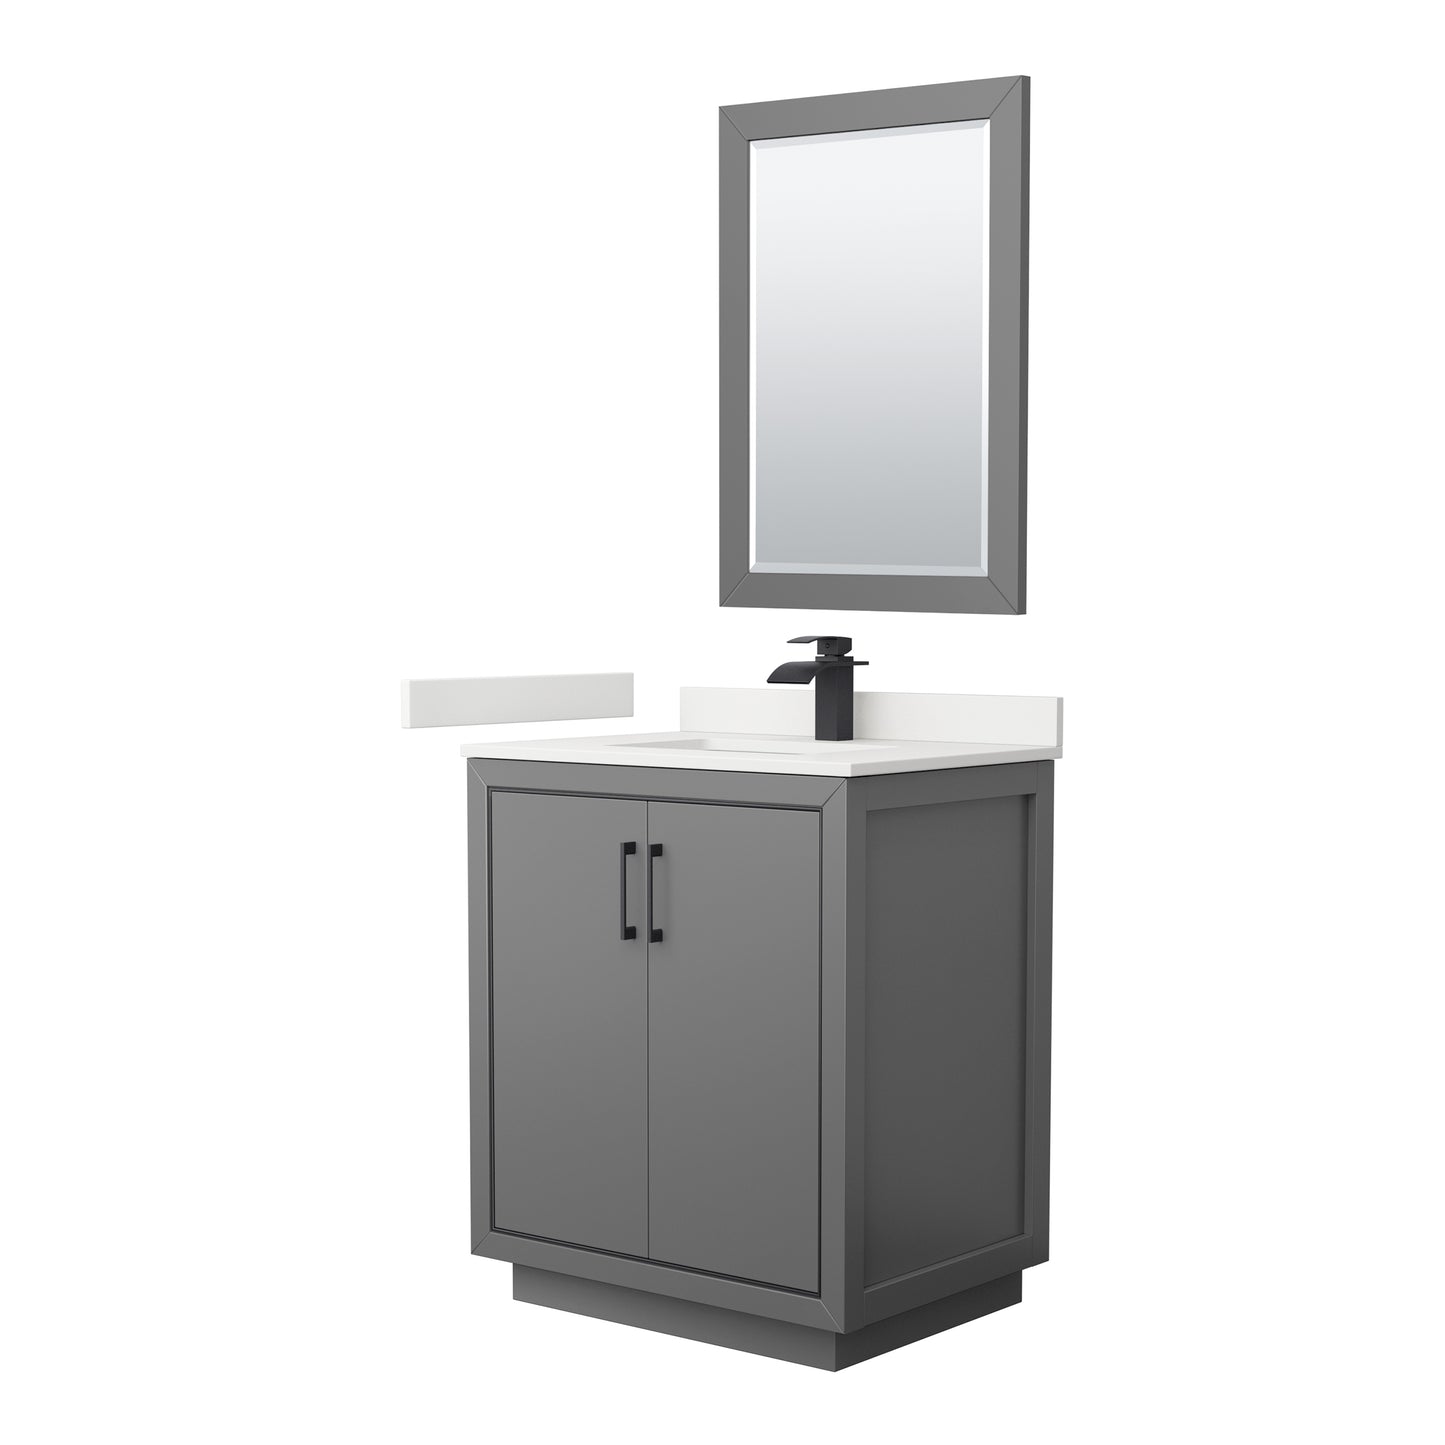 Wyndham Collection Icon 30 Inch Single Bathroom Vanity in Dark Gray,Quartz Countertop, Undermount Square Sink (1-Hole)